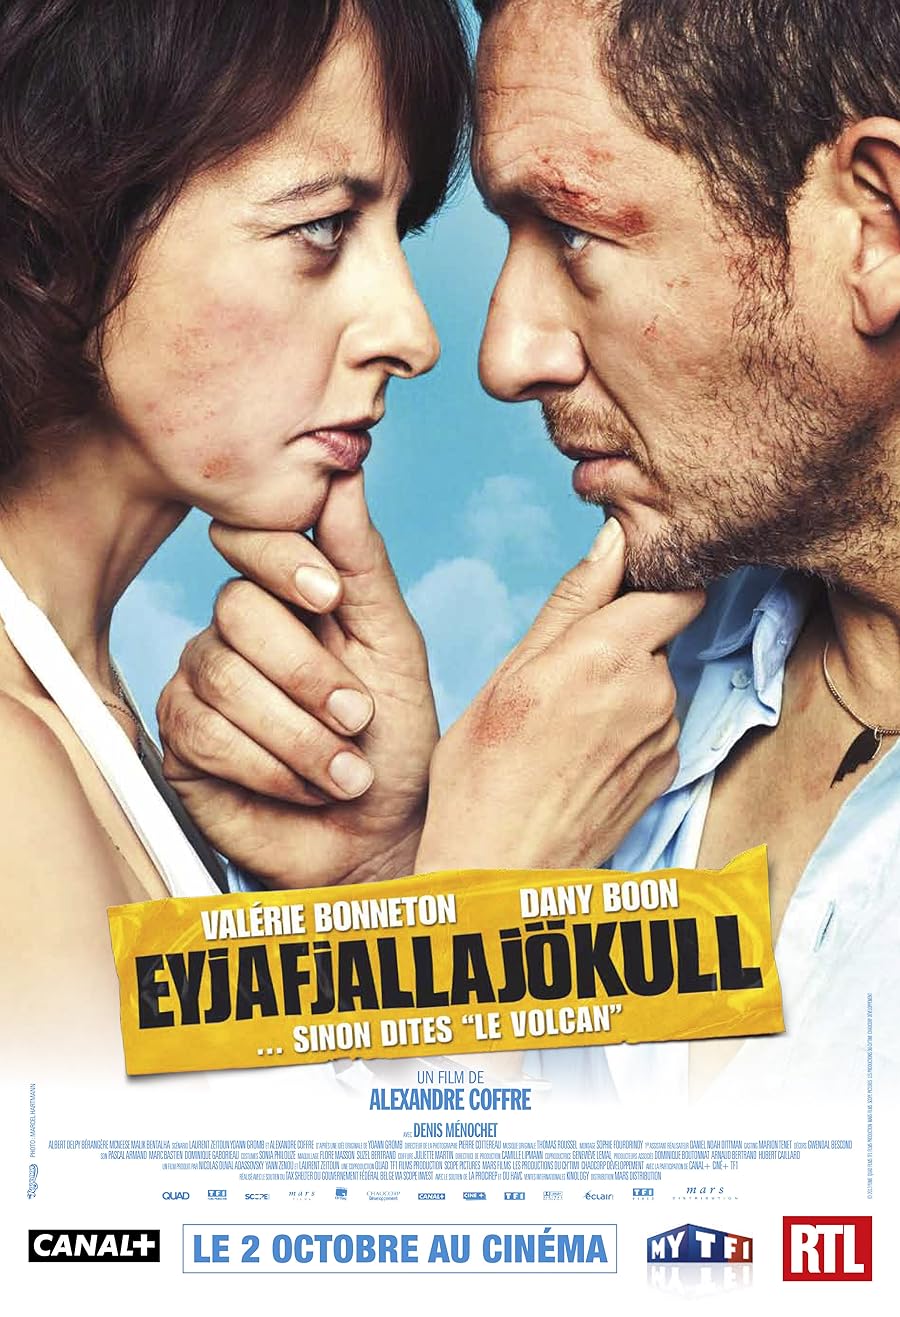 دانلود فیلم خارجی Eyjafjallajökull 2013 دوبله فارسی بدون سانسور